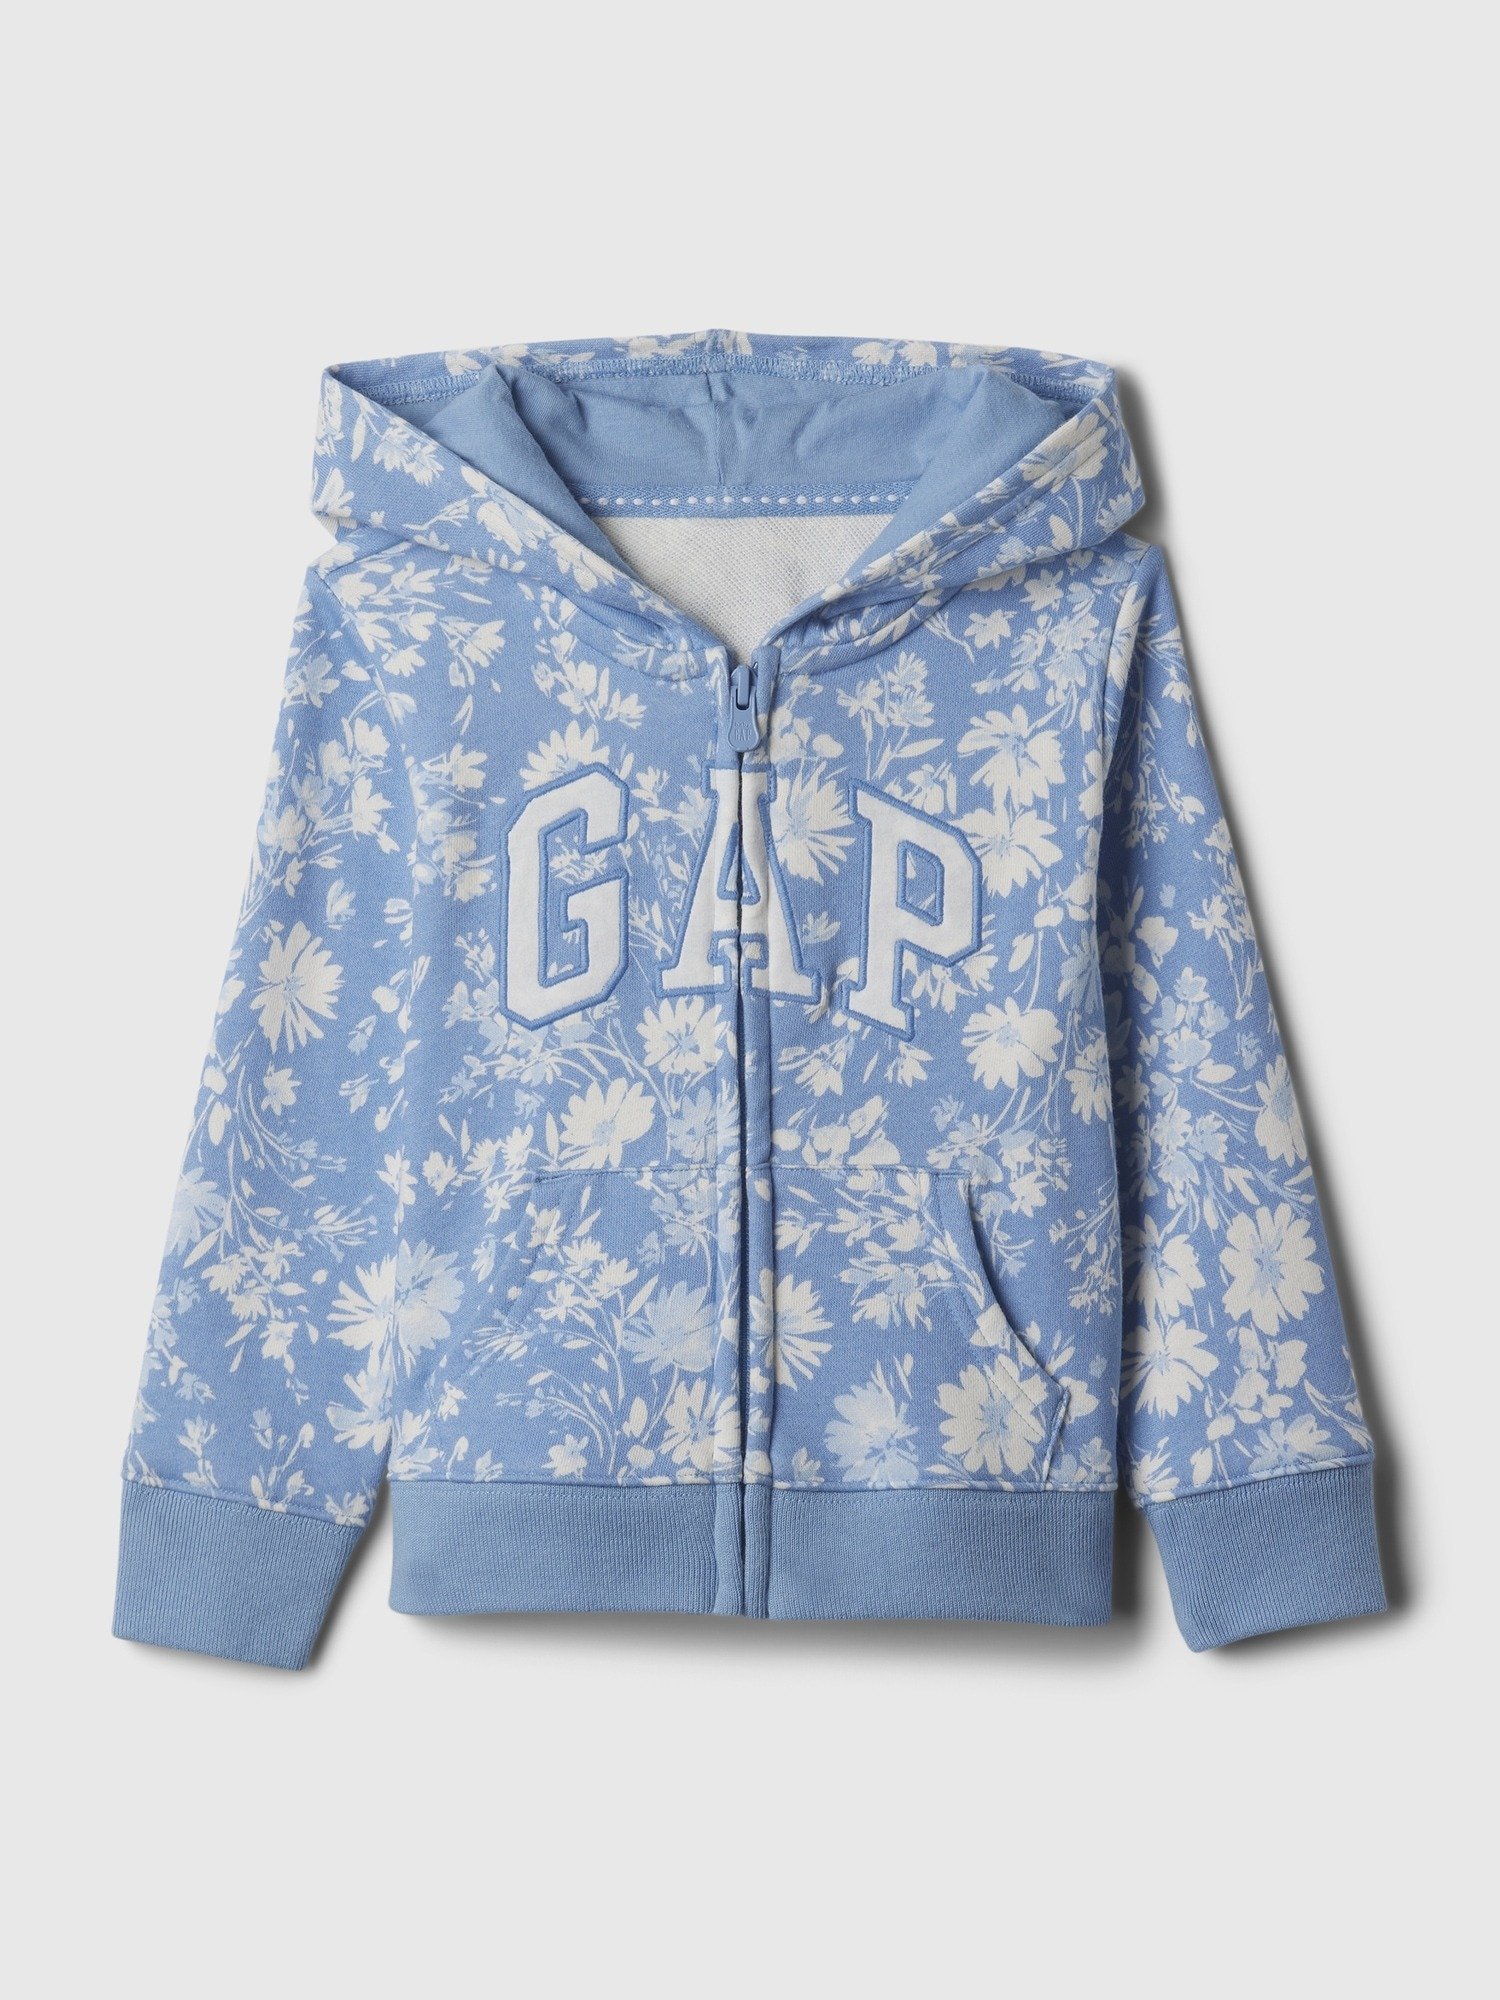 Gap Logo Fermuarlı Fransız Havlu Kumaş Sweatshirt product image